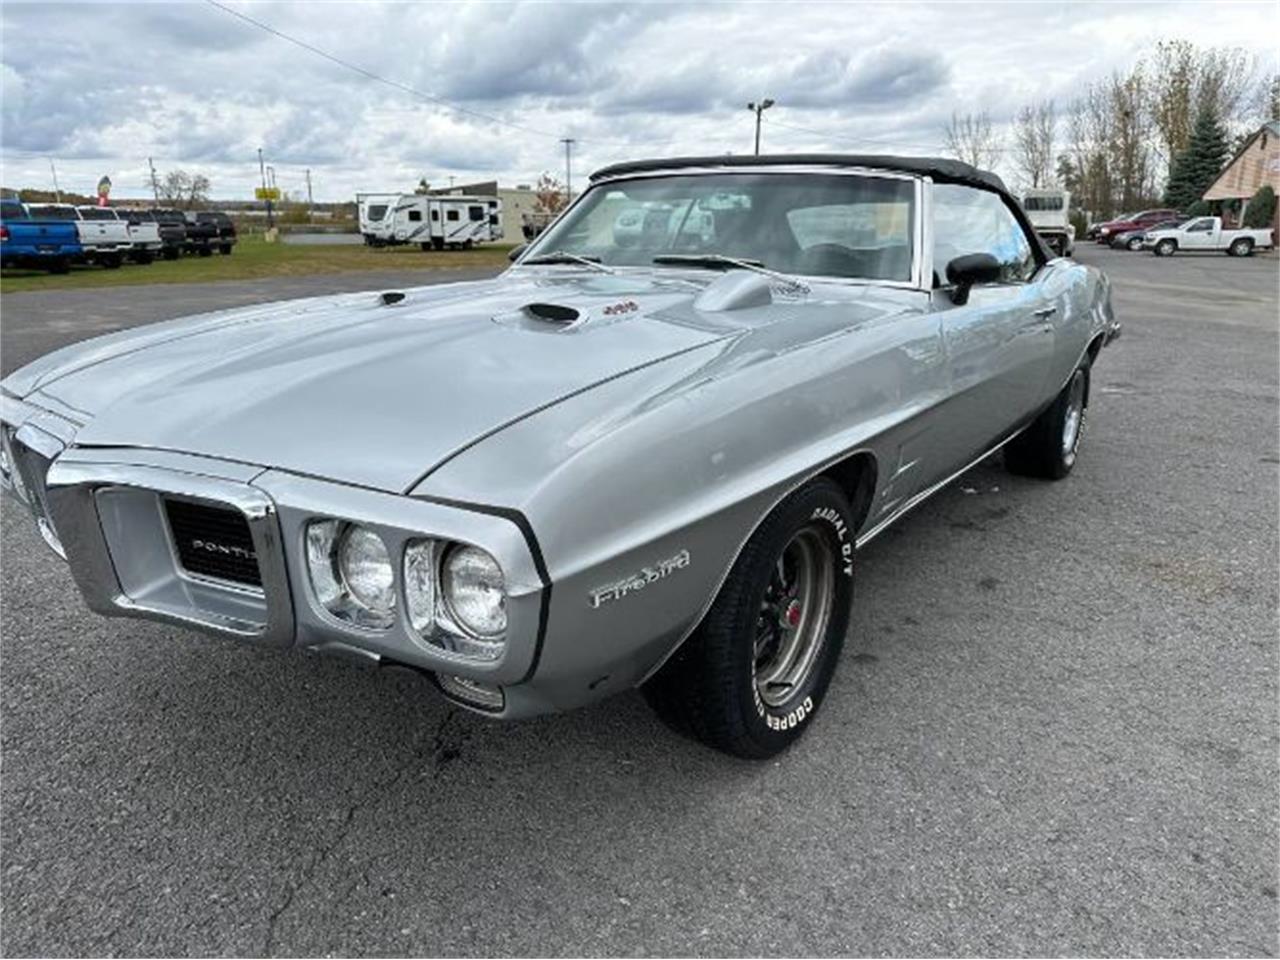 For Sale: 1969 Pontiac Firebird in Cadillac, Michigan for sale in Cadillac, MI